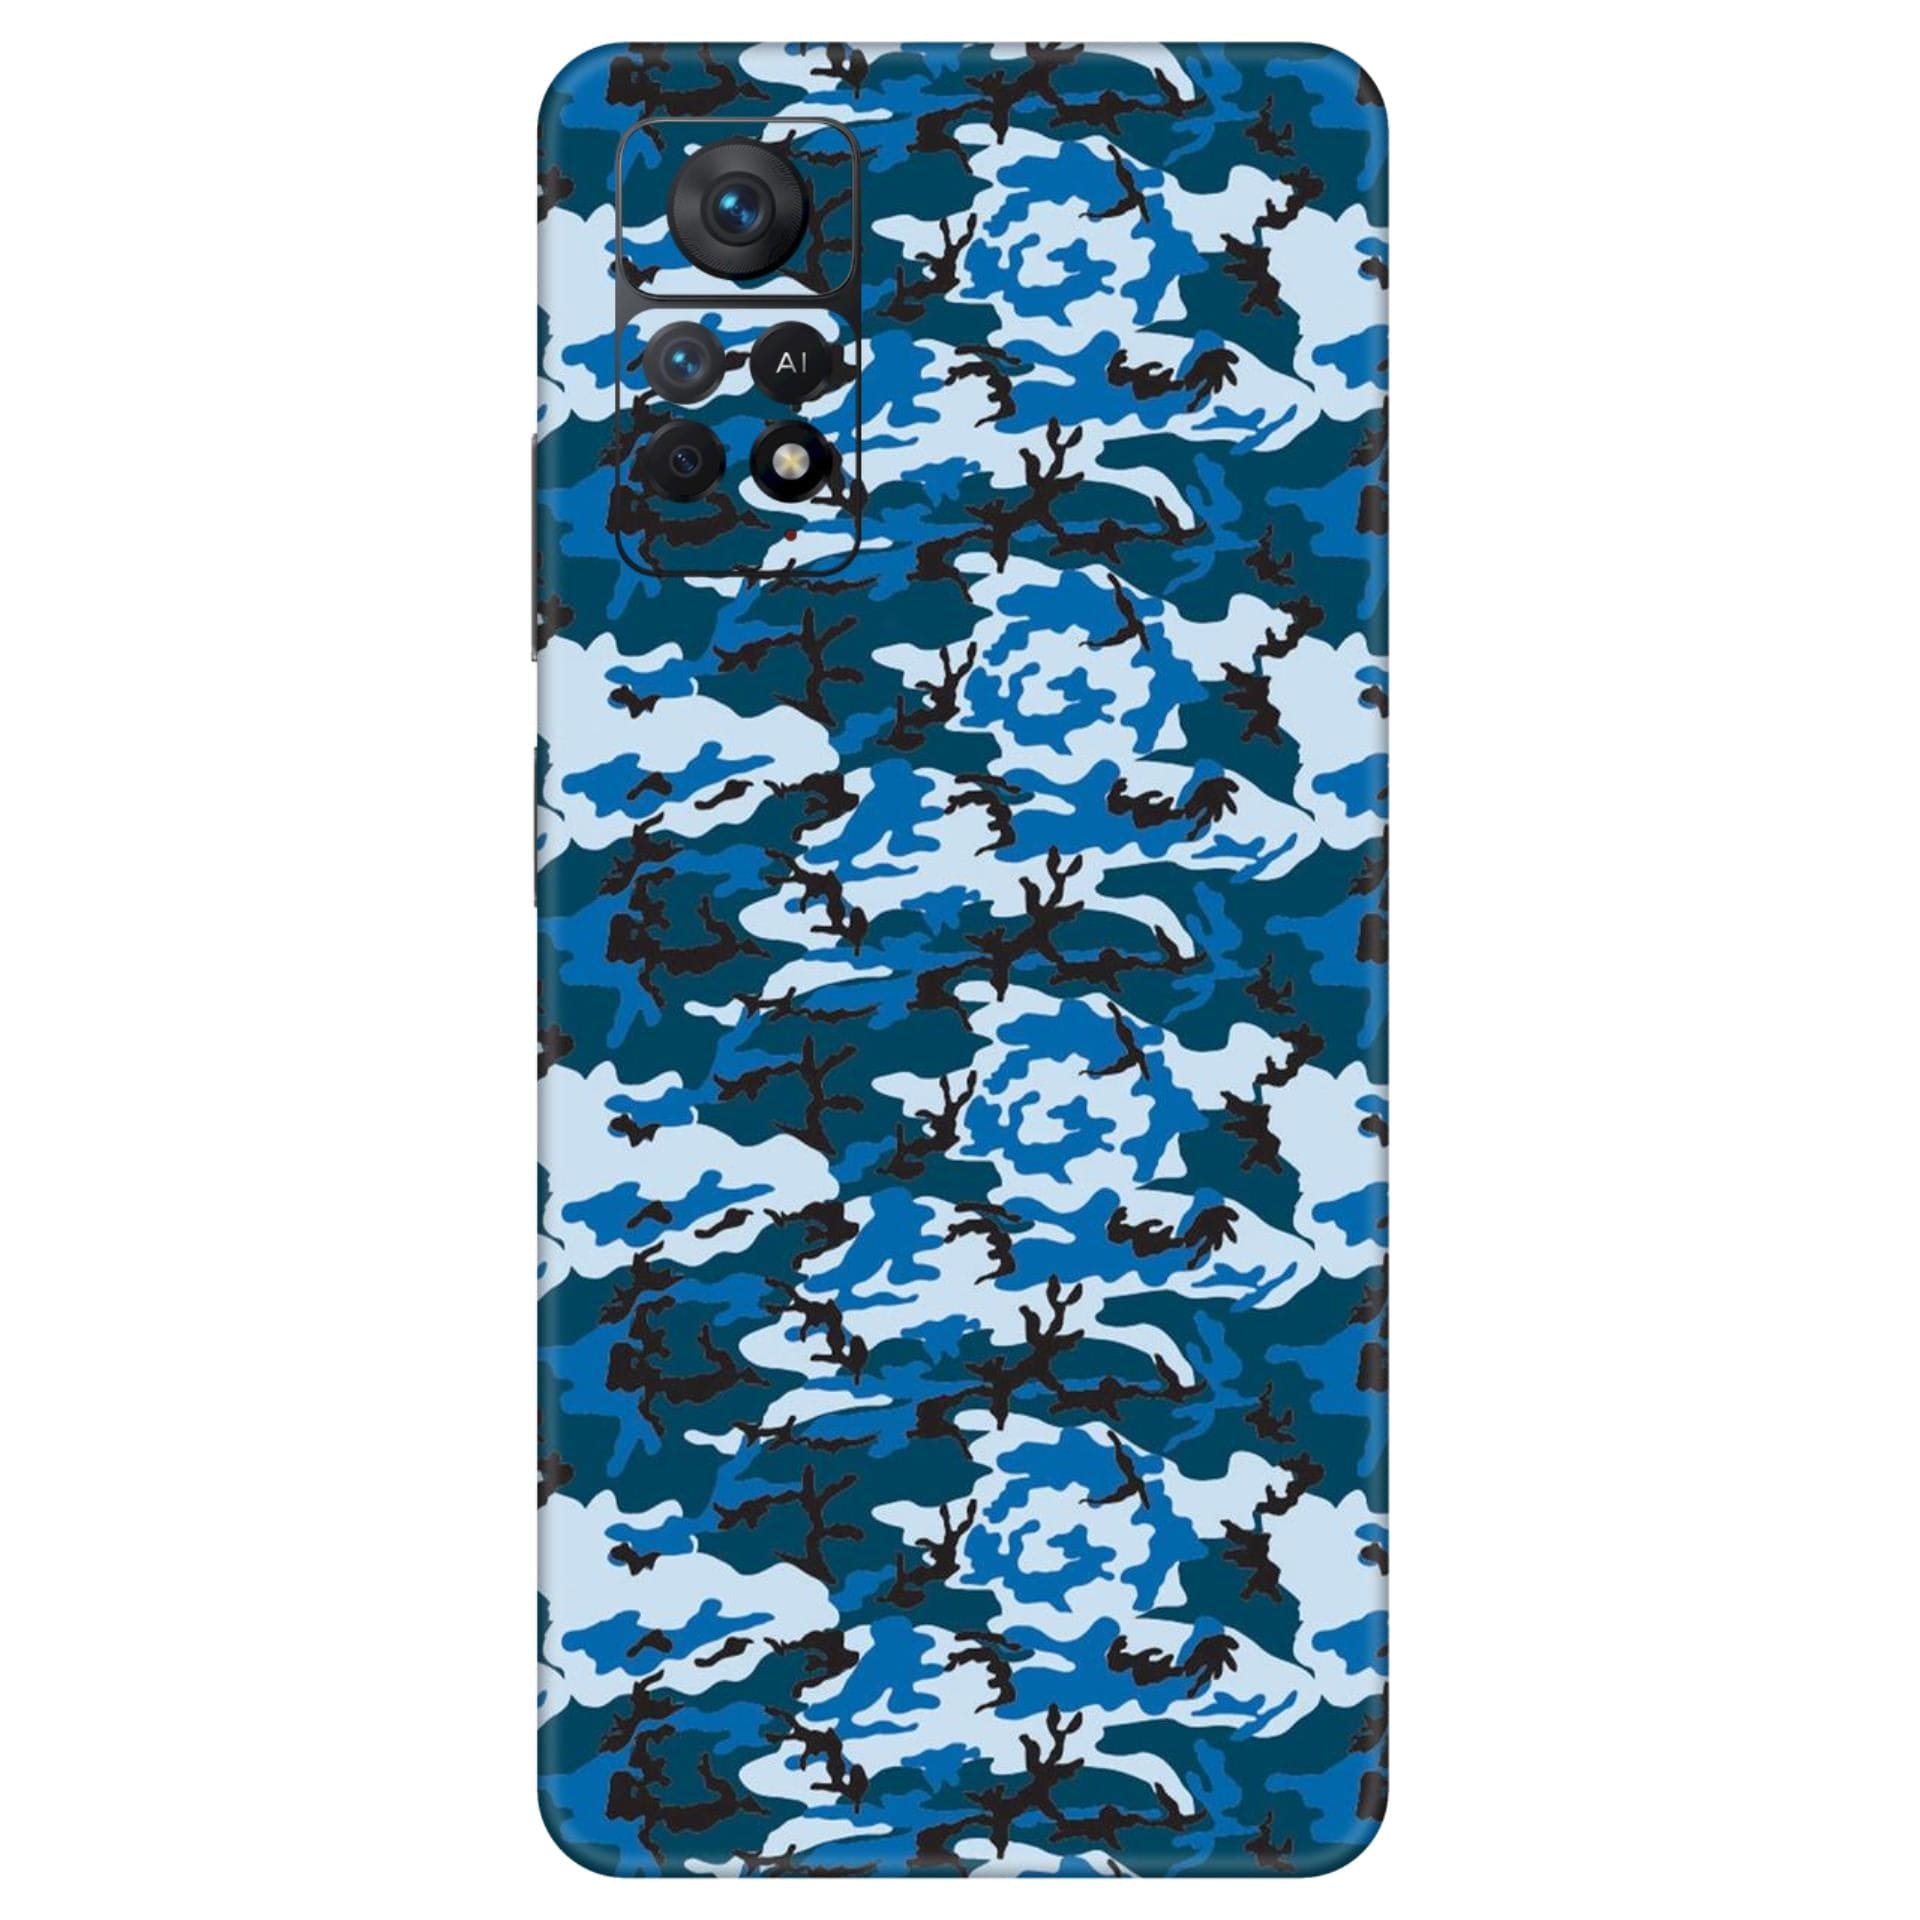 Redmi Note 11 Pro Plus Digi Blue Camo skins